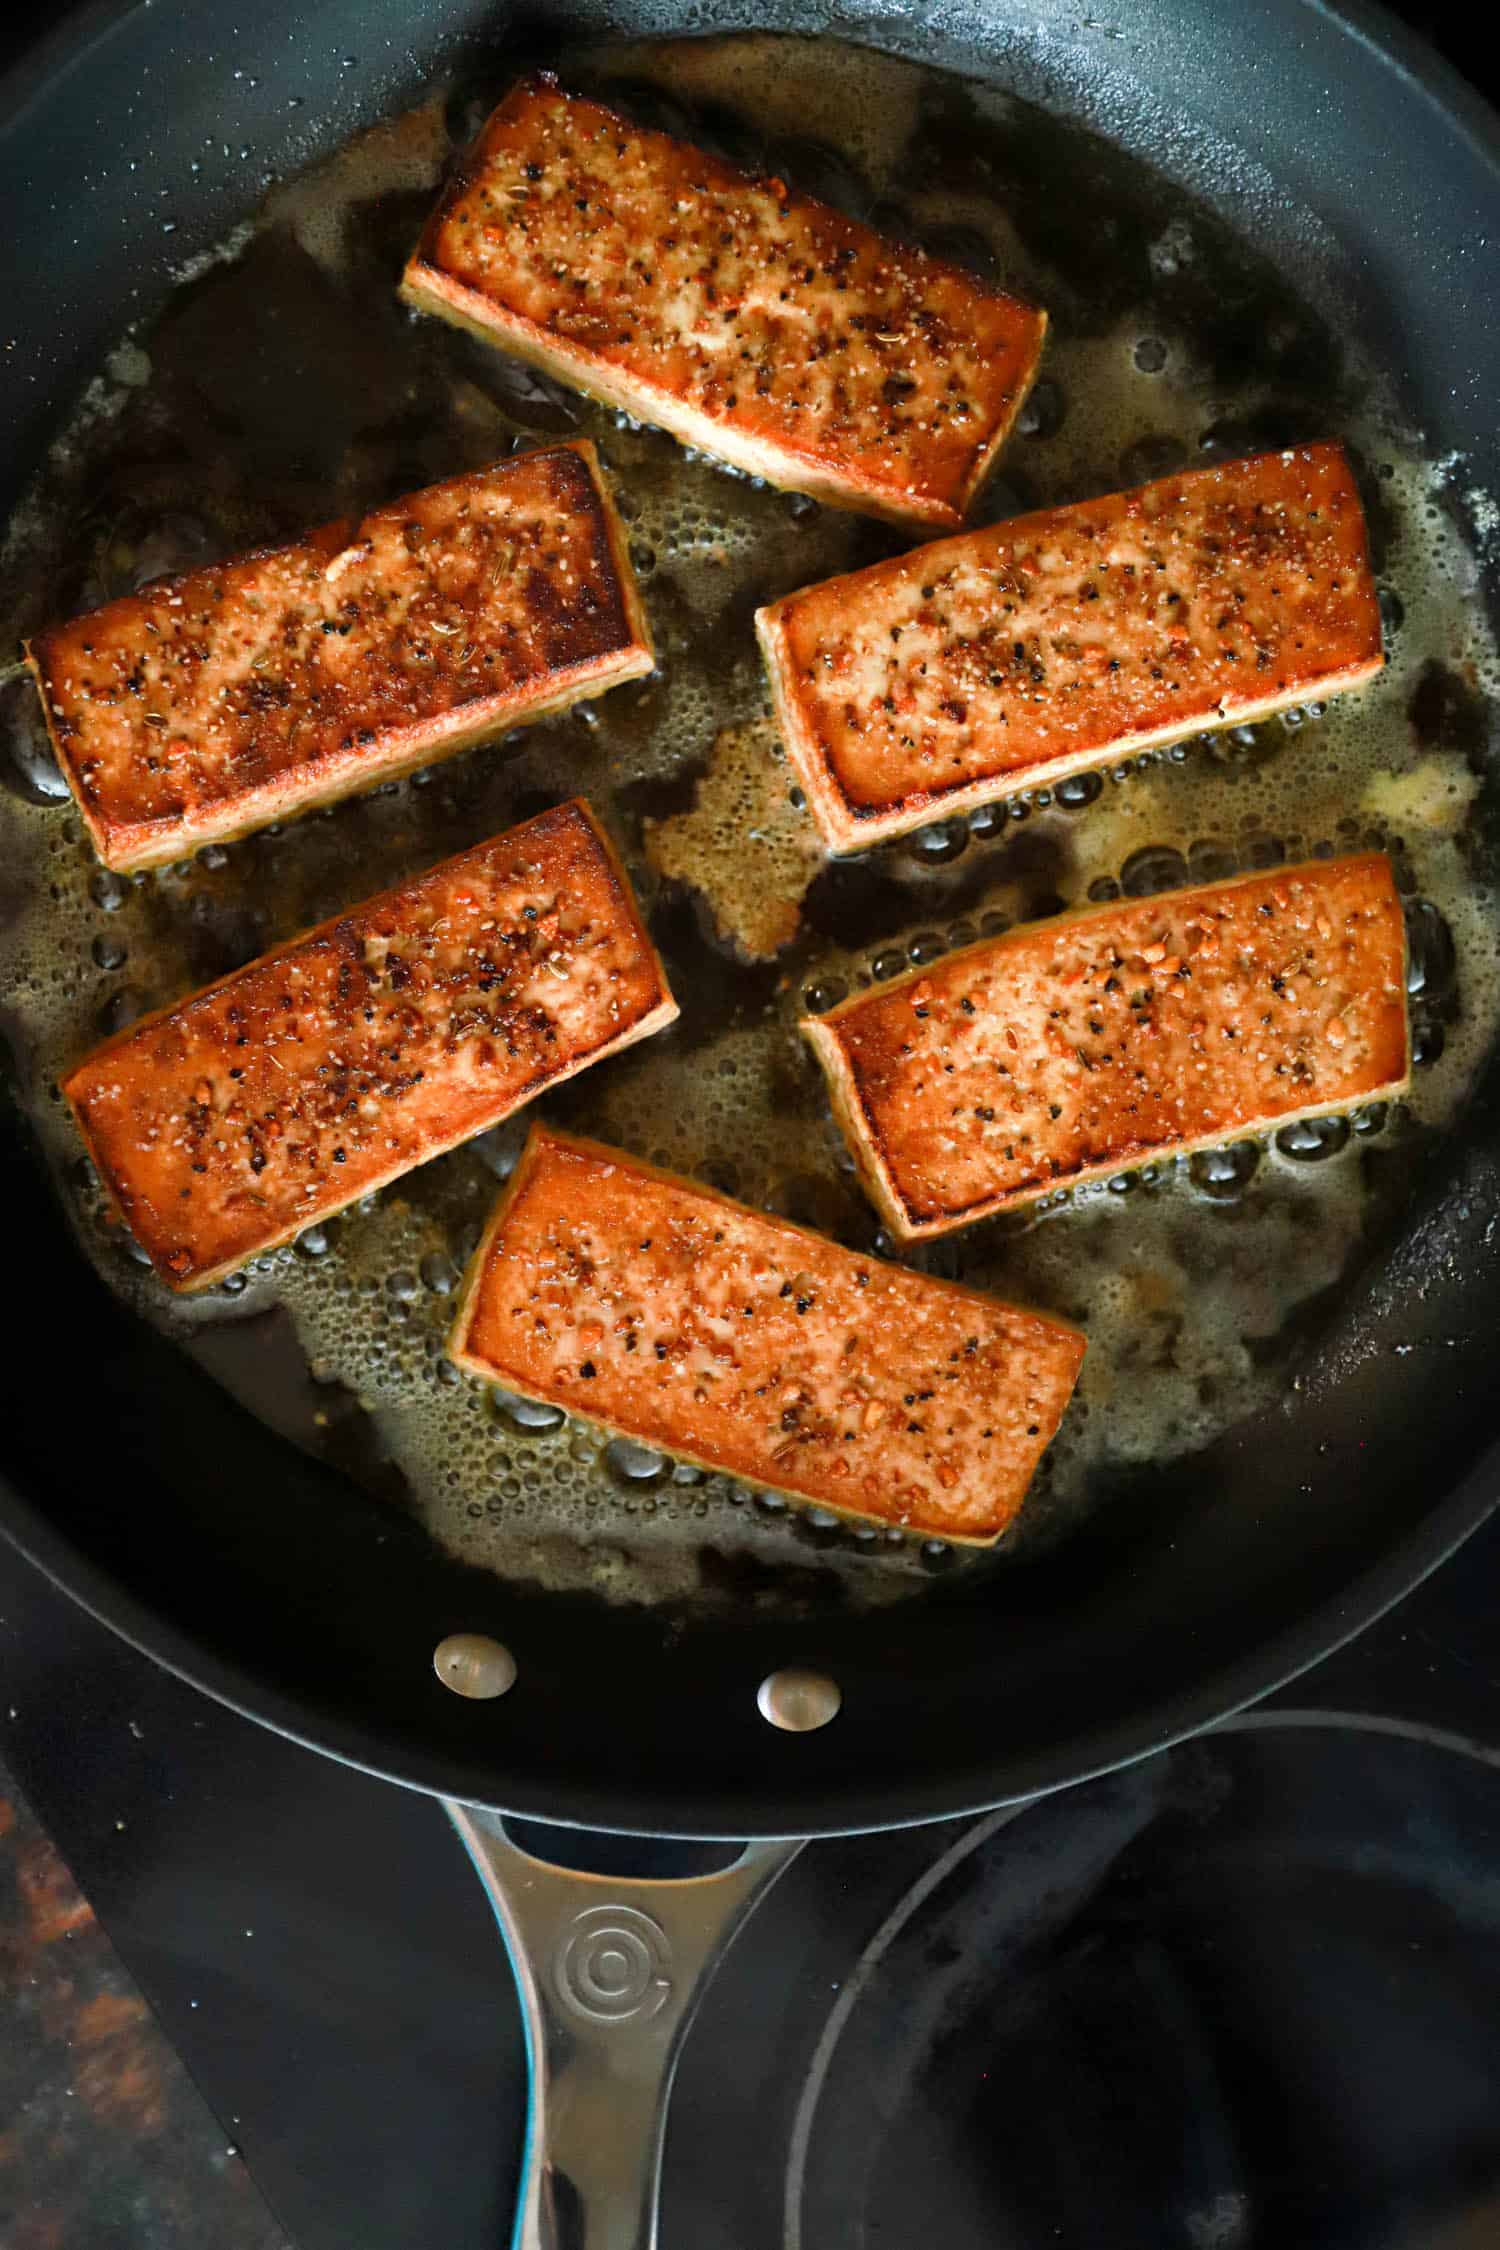 Golden brown tofu slabs in black nonstick skillet.